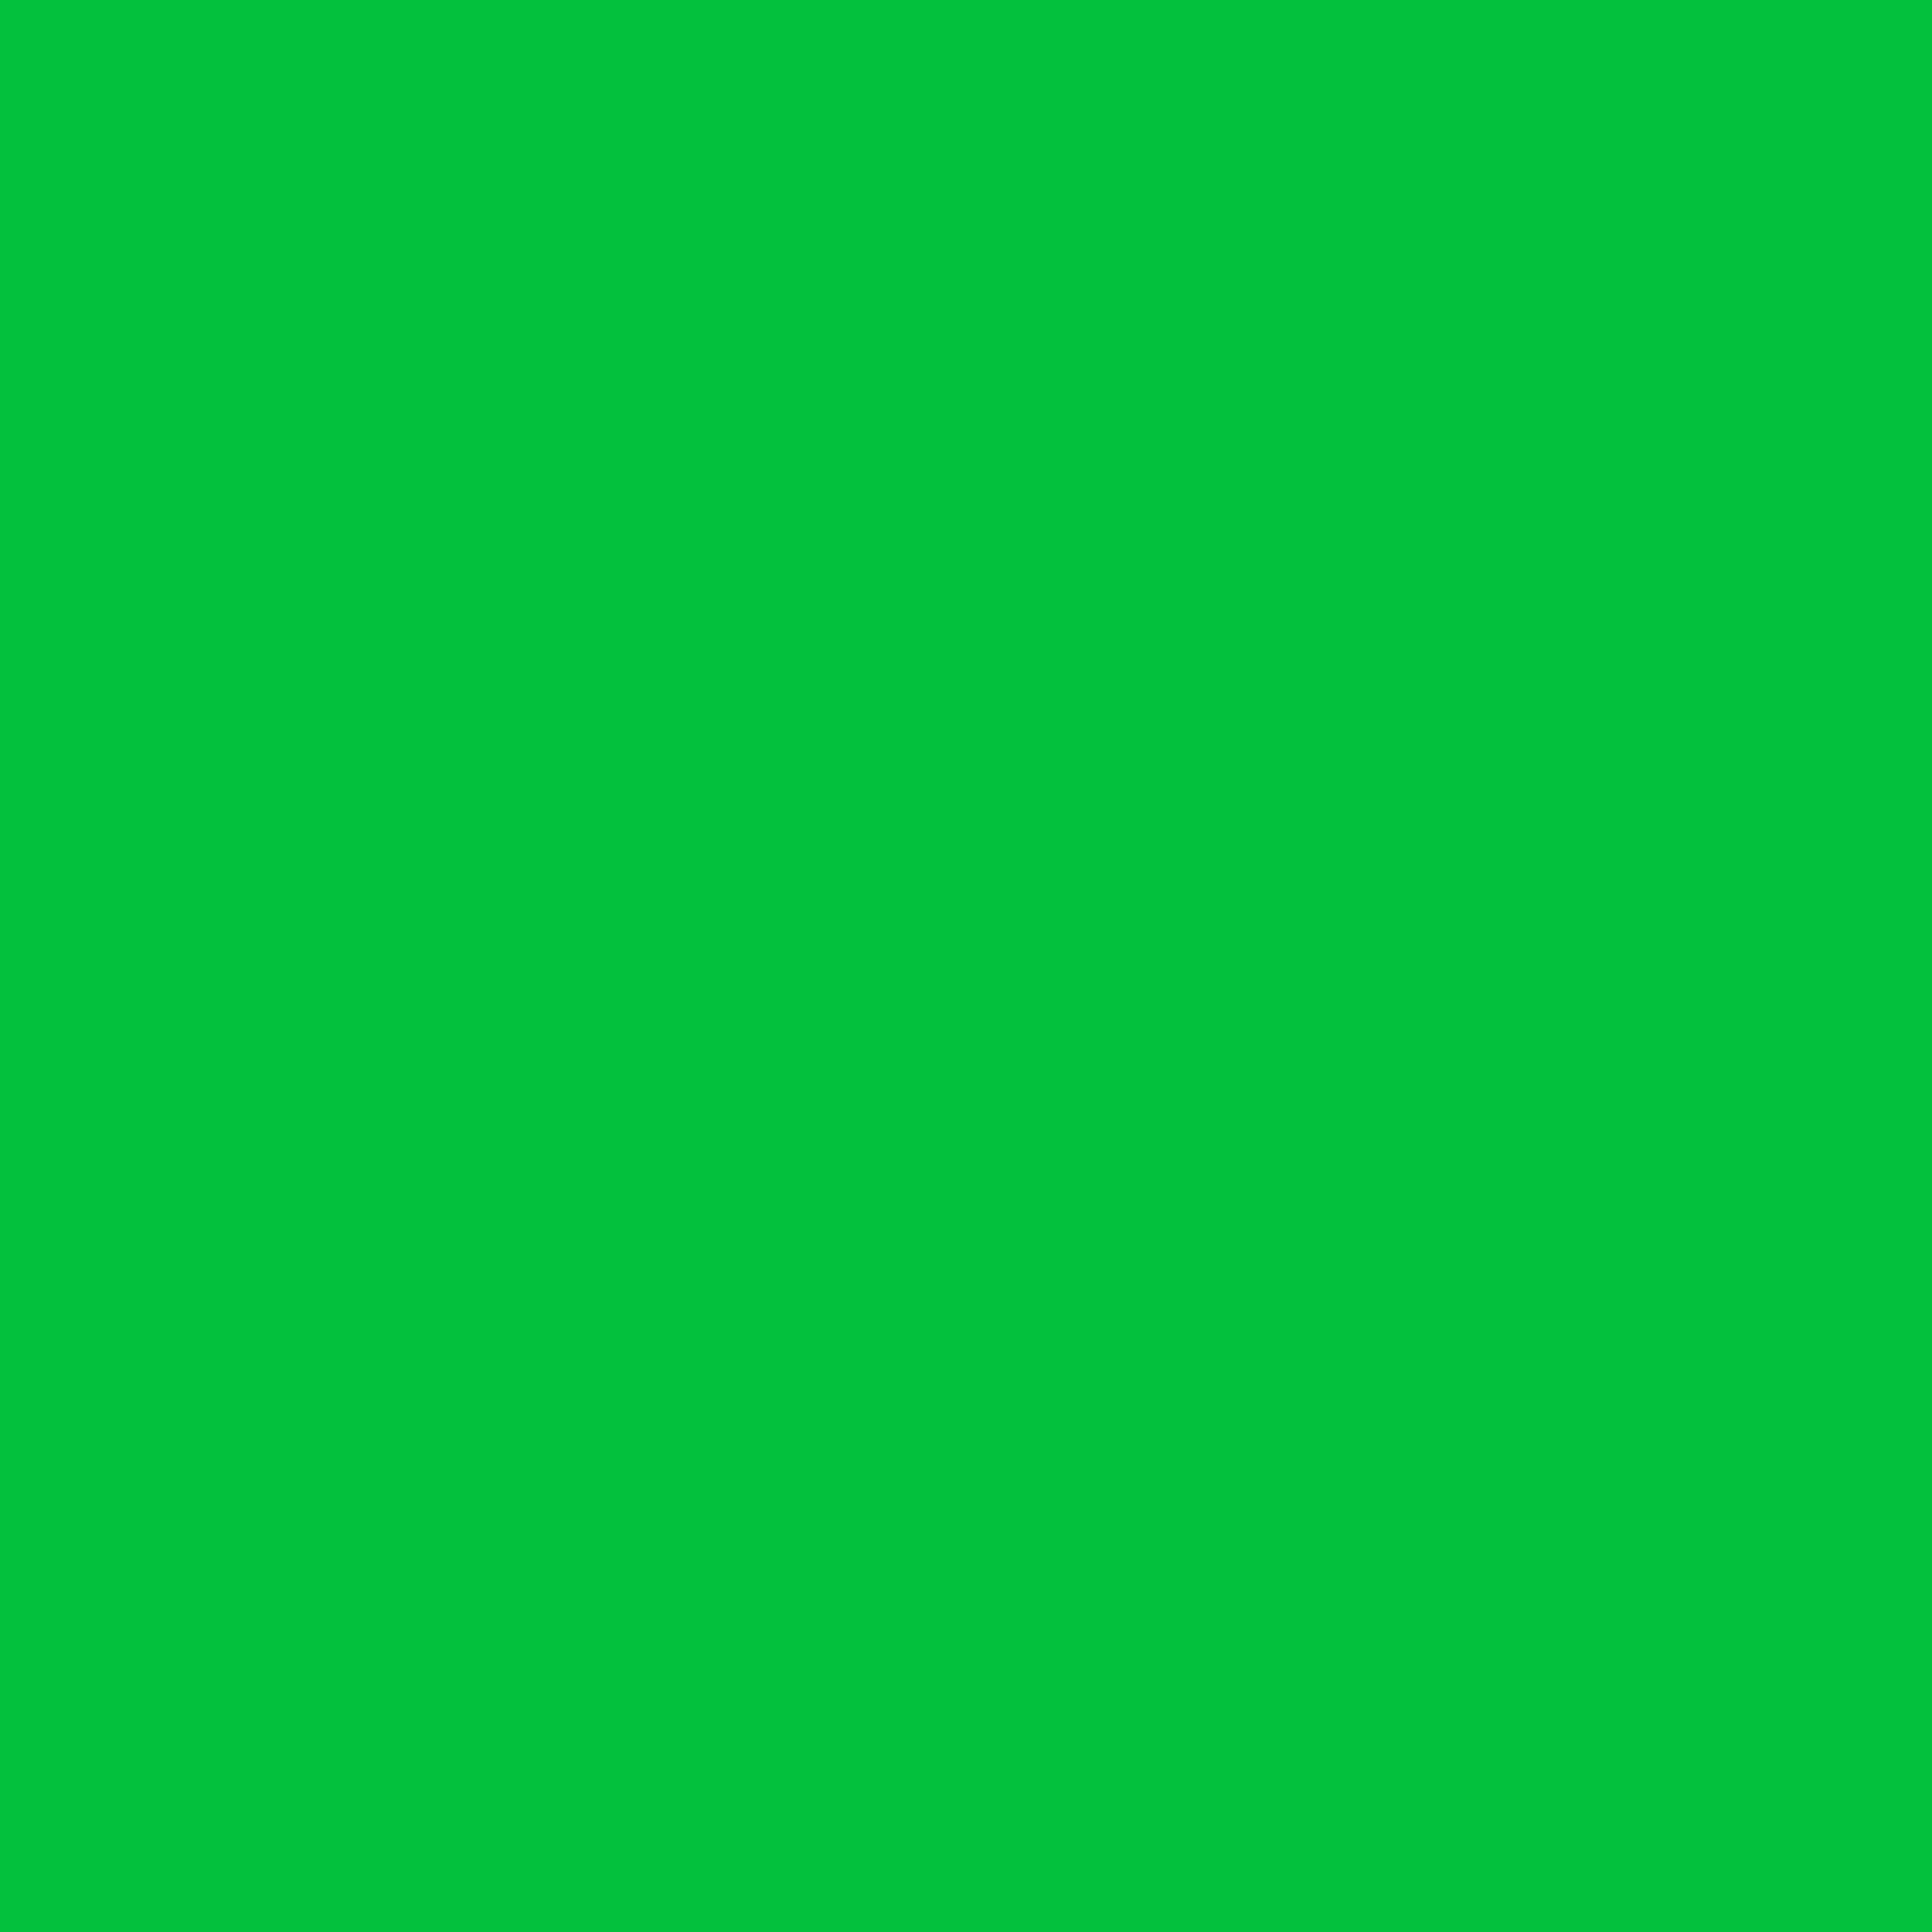 Plain Solid Pastel Green Background - Iwish Iwas